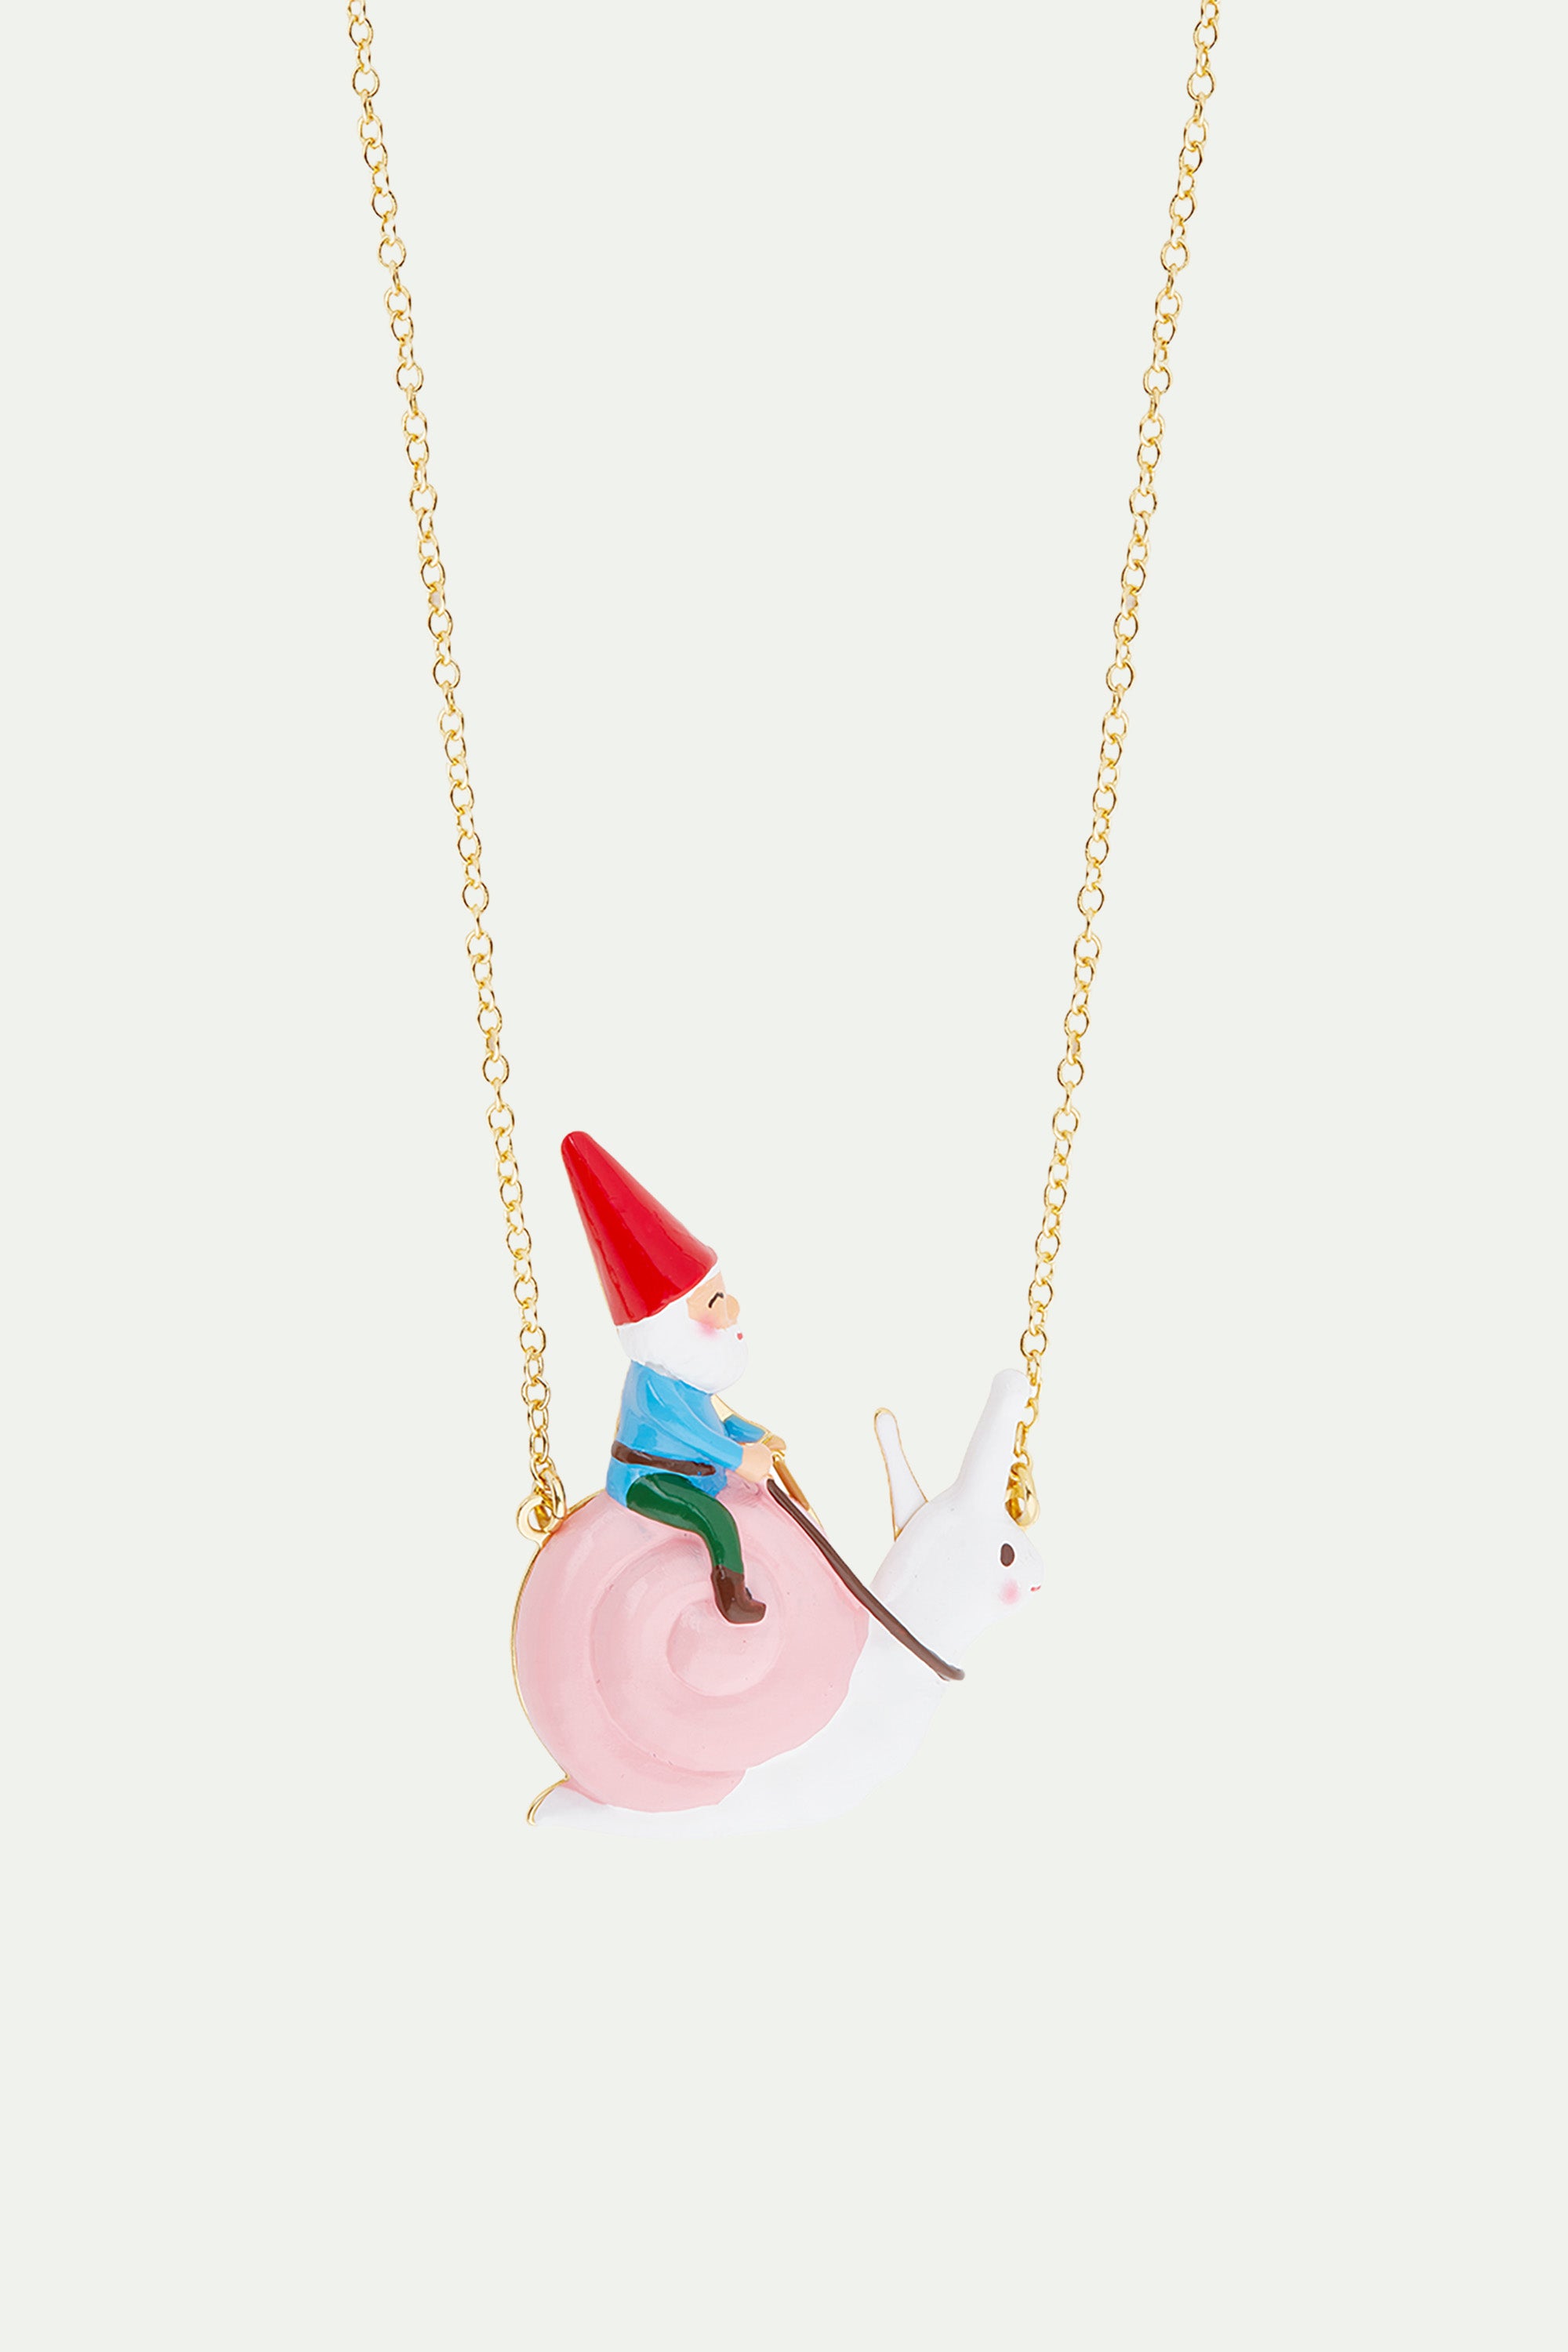 Garden gnome and snail riding pendant necklace